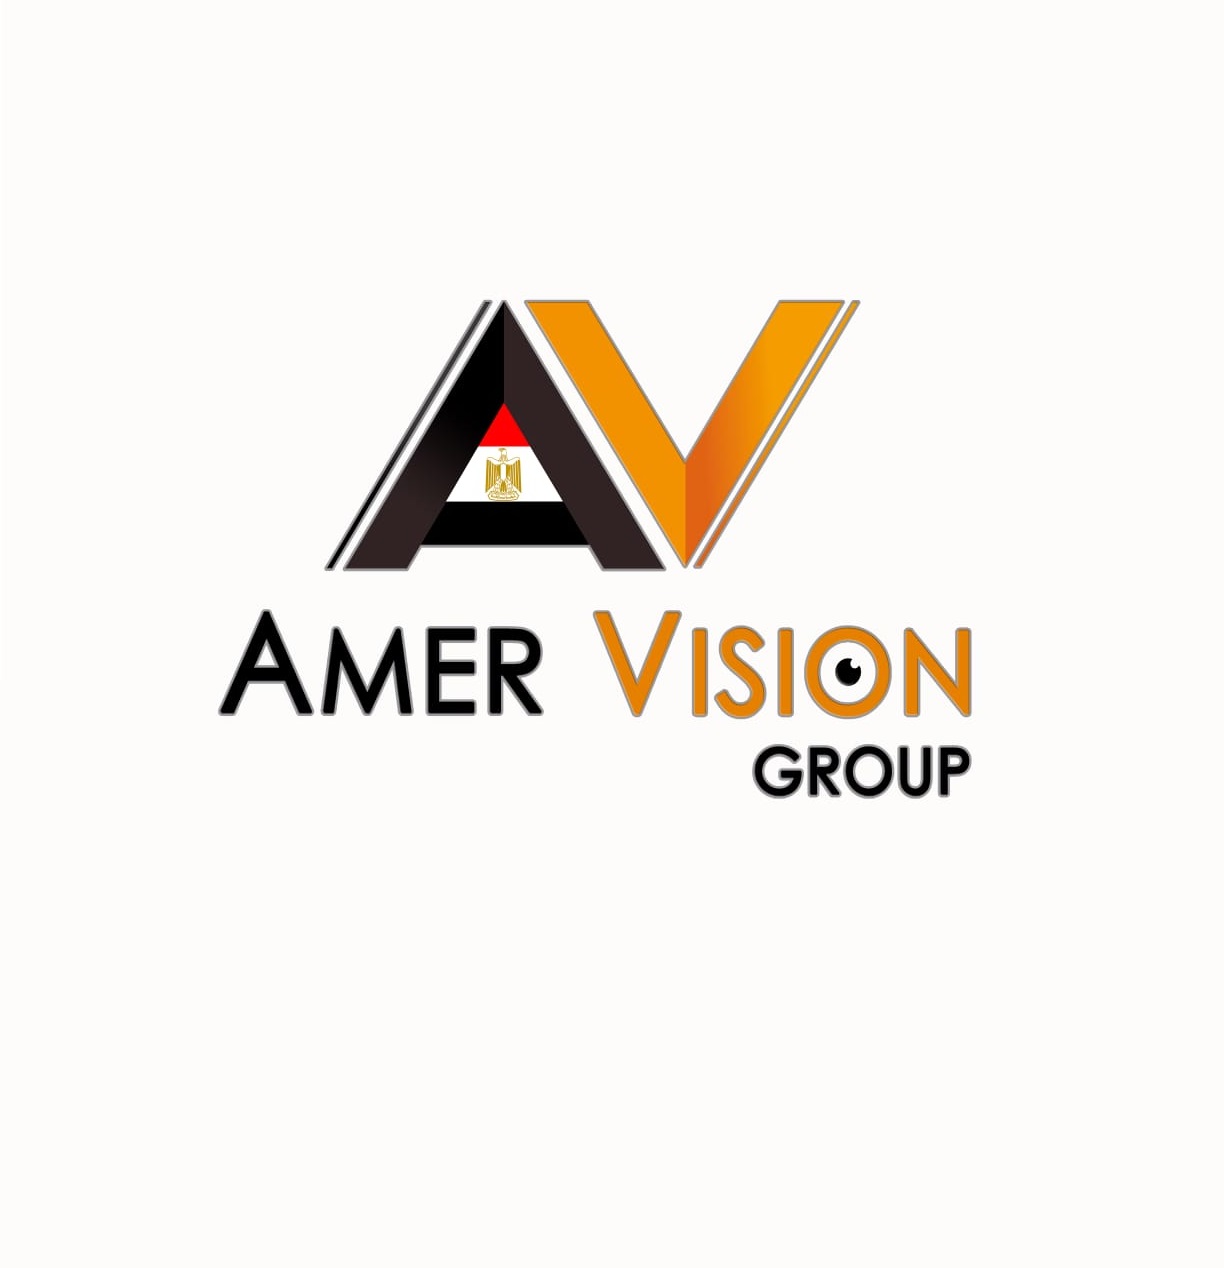 Amer vision